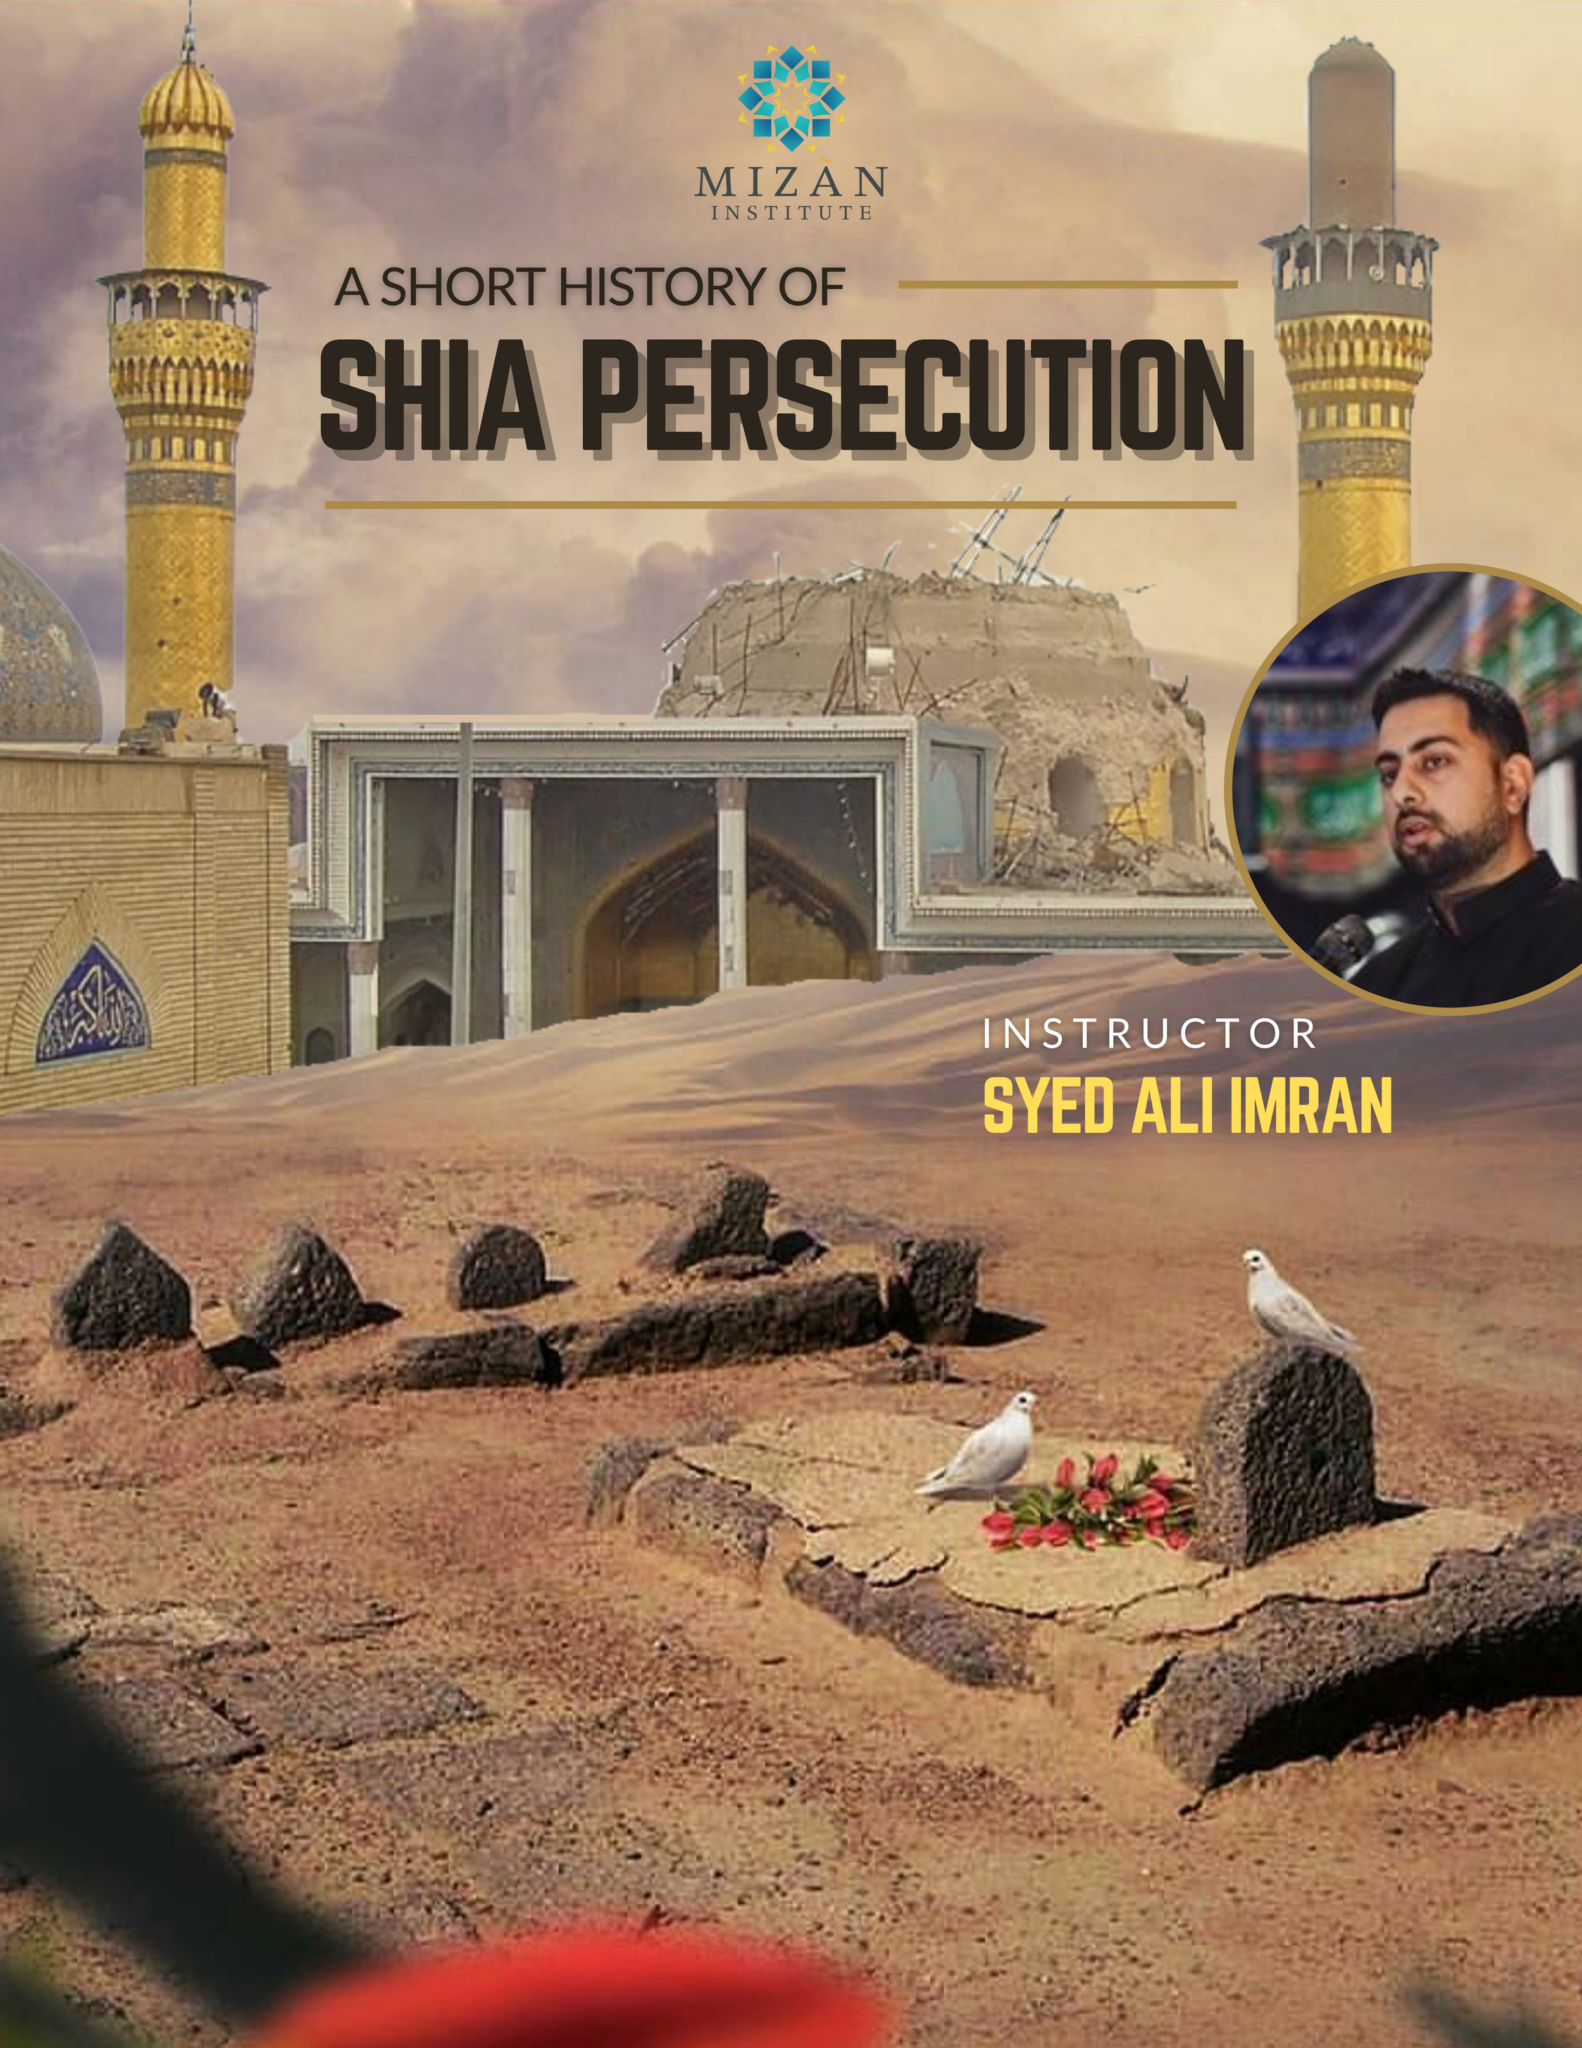 Shia+Persecution+plain+poster